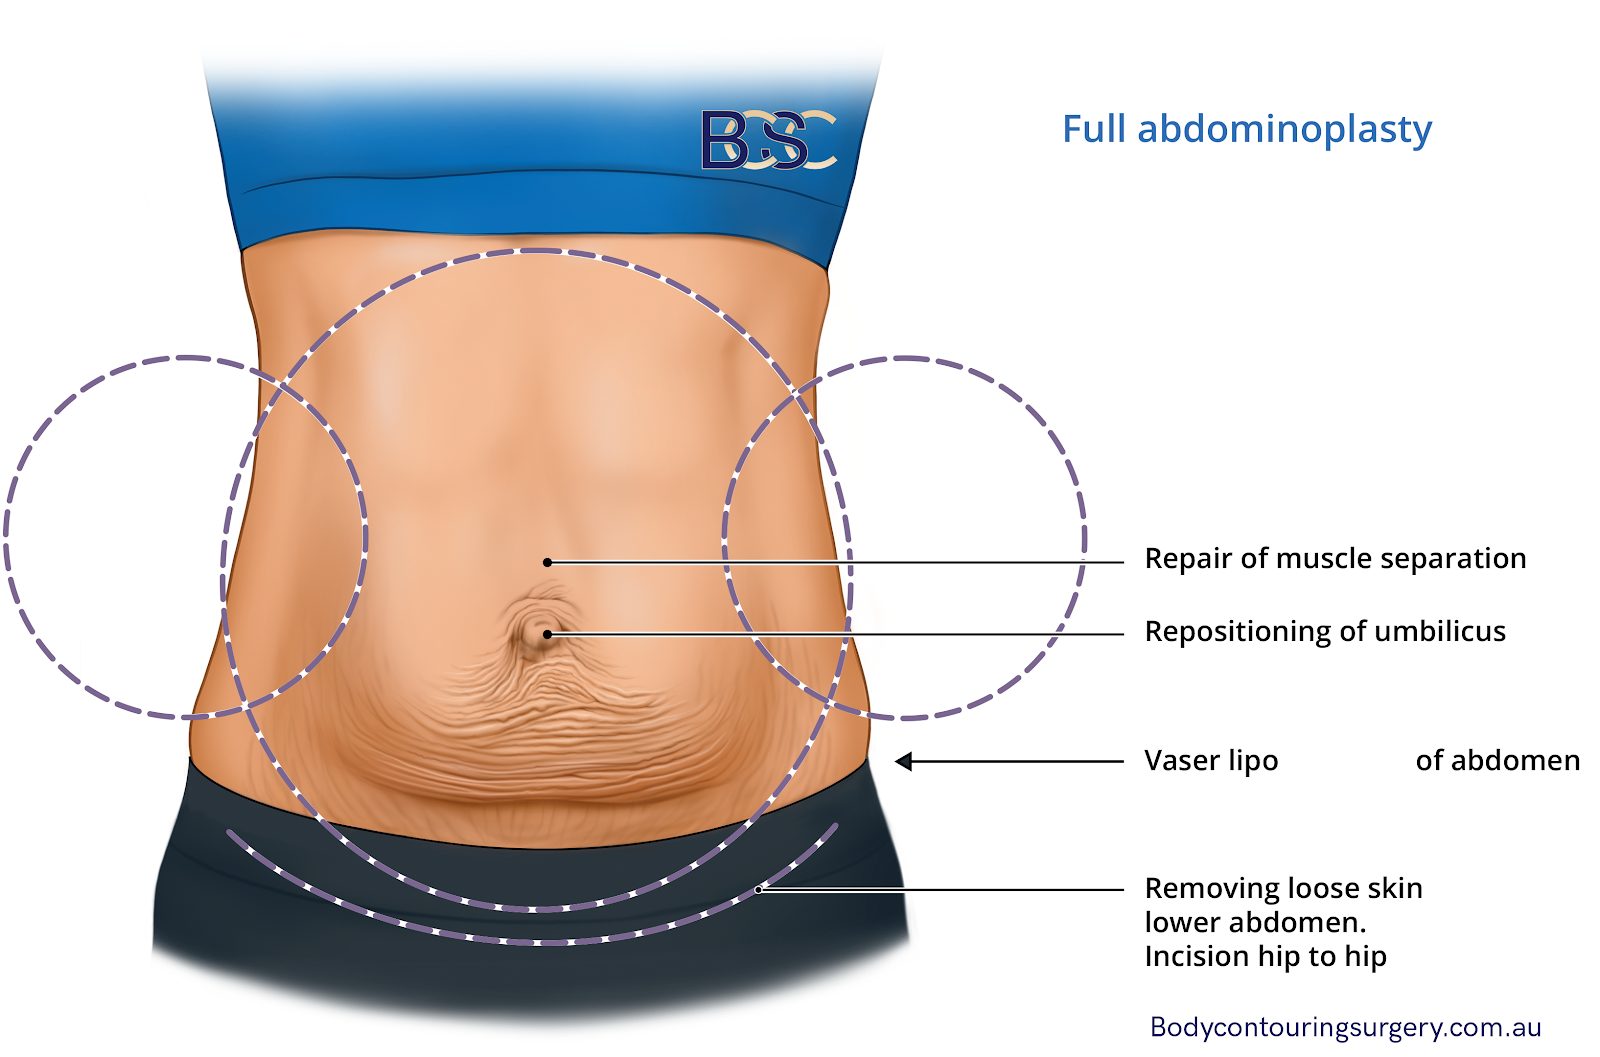 Illustration of Full abdominoplasty